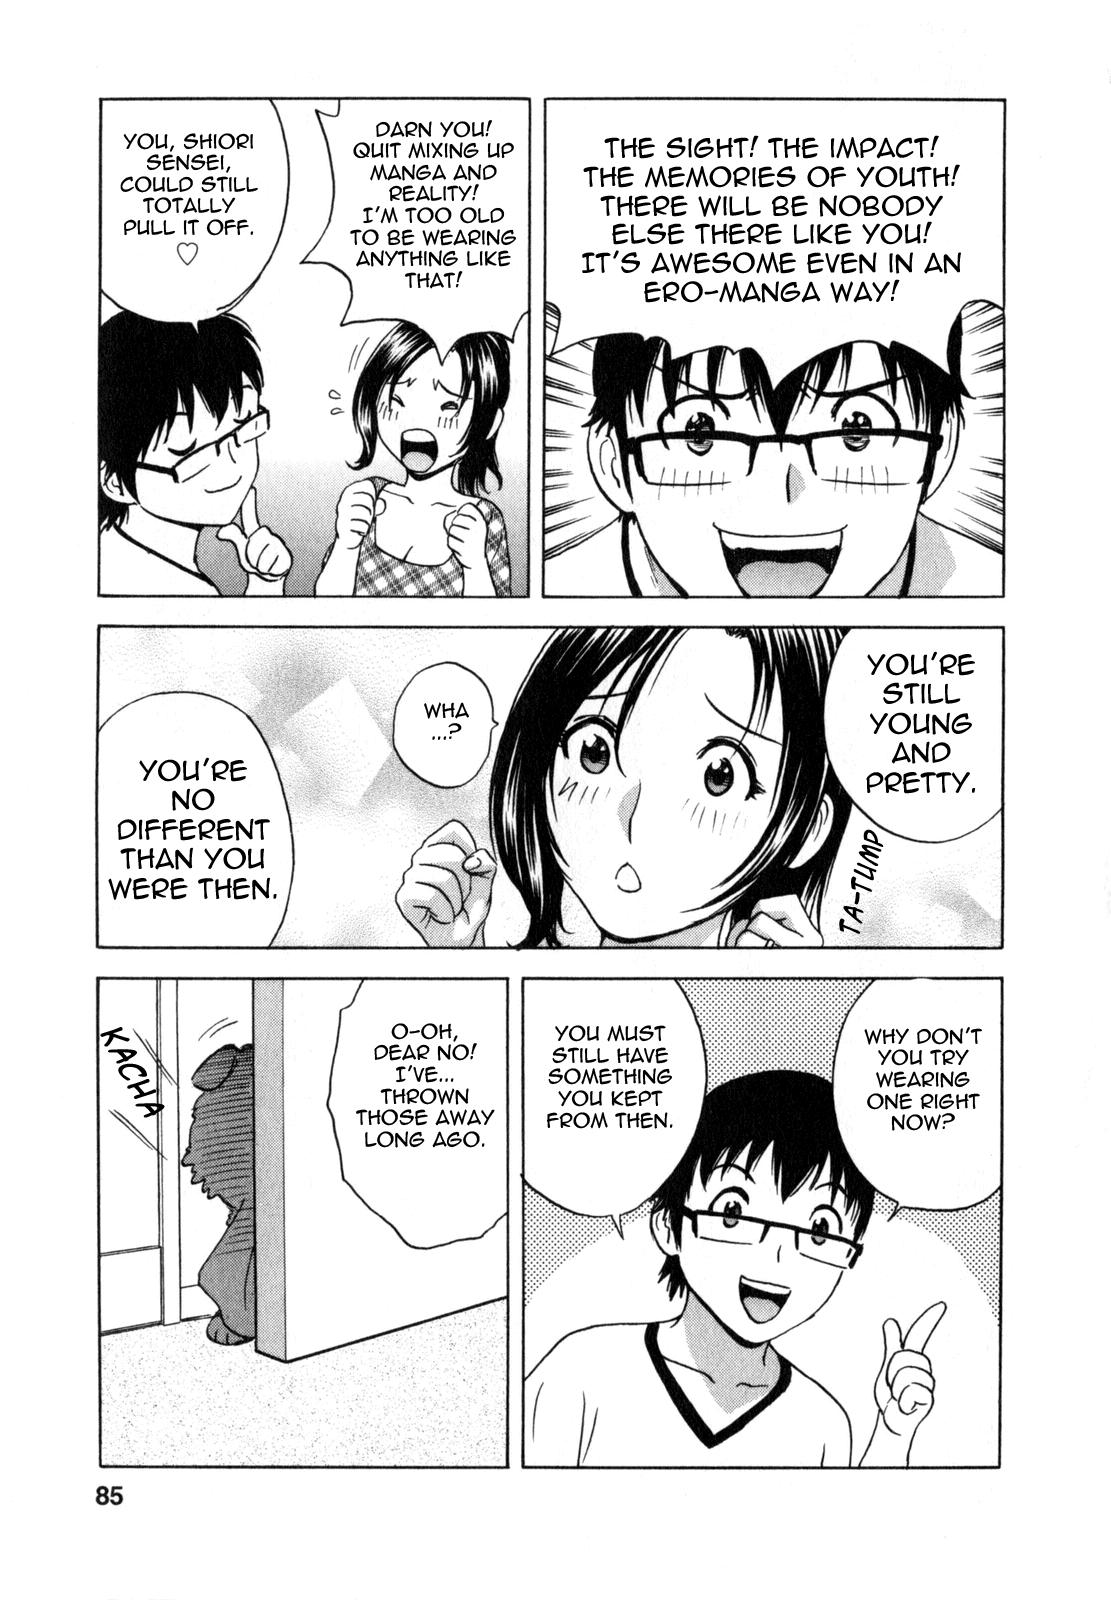 [Hidemaru] Life with Married Women Just Like a Manga 1 - Ch. 1-8 [English] {Tadanohito} 89